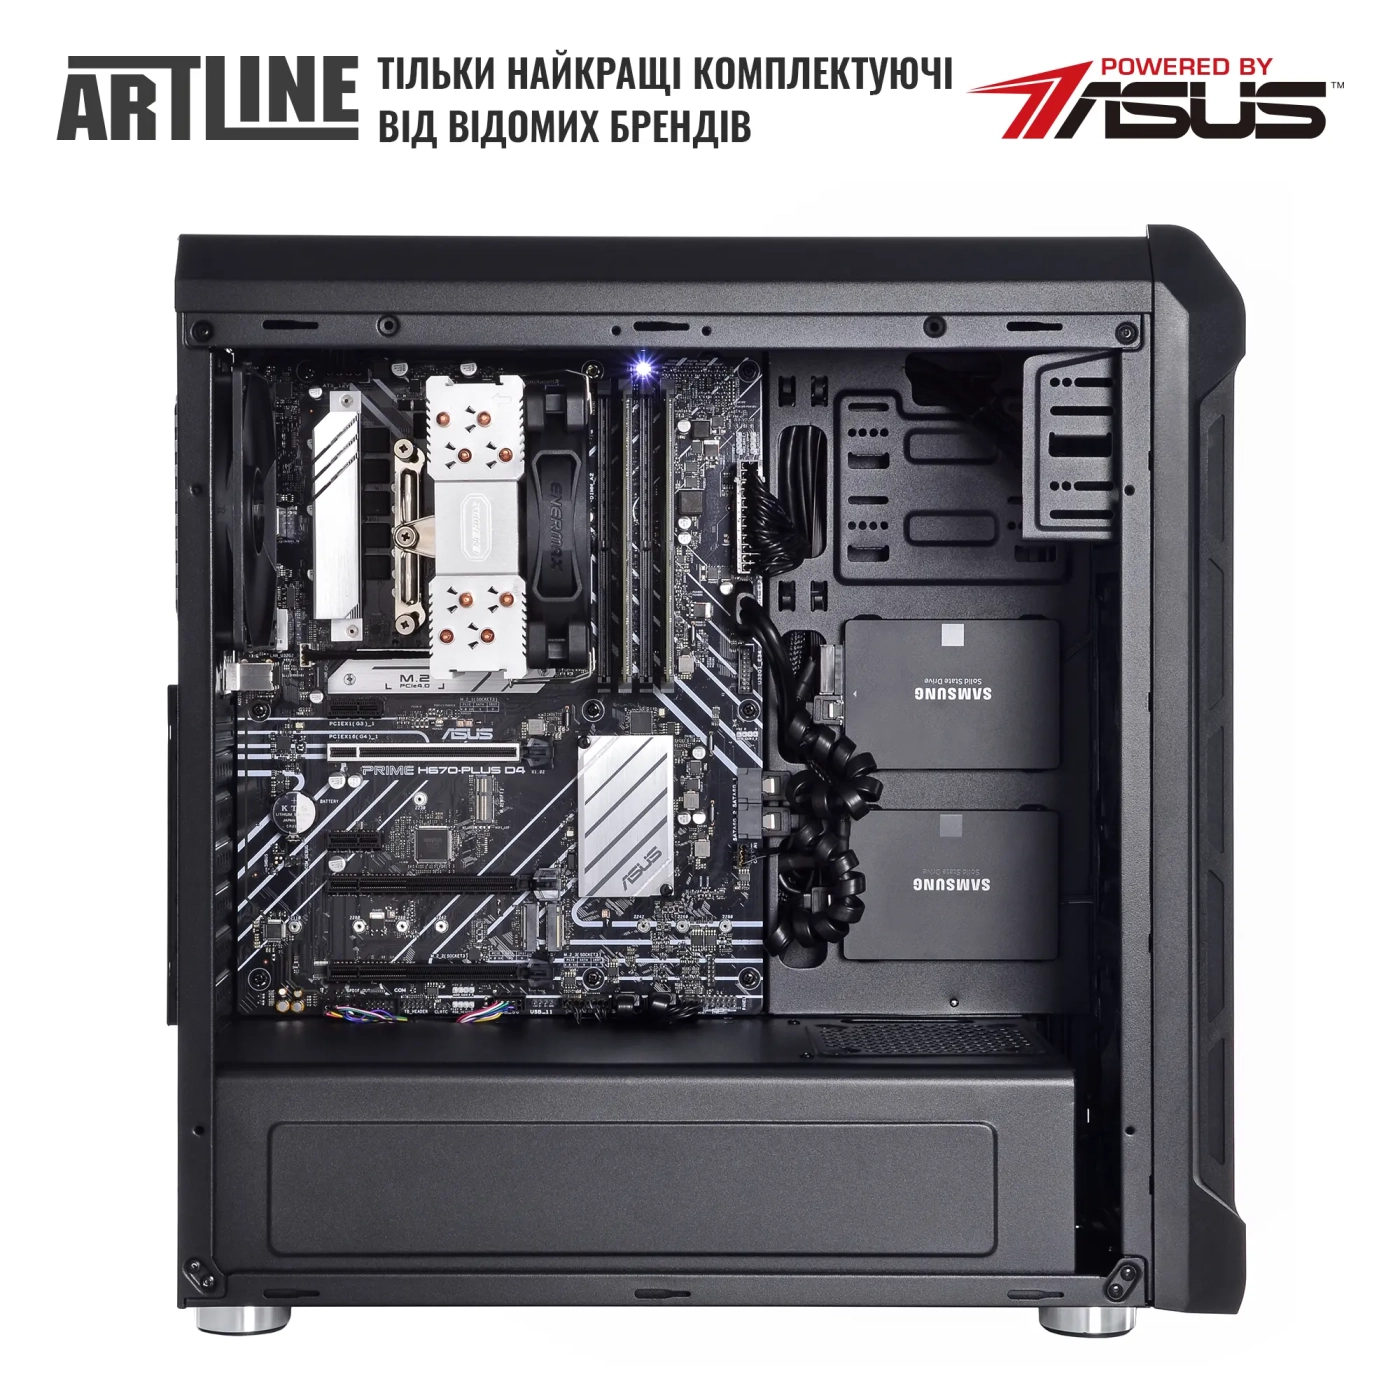 Купити Сервер ARTLINE Business T27 (T27v30) - фото 4